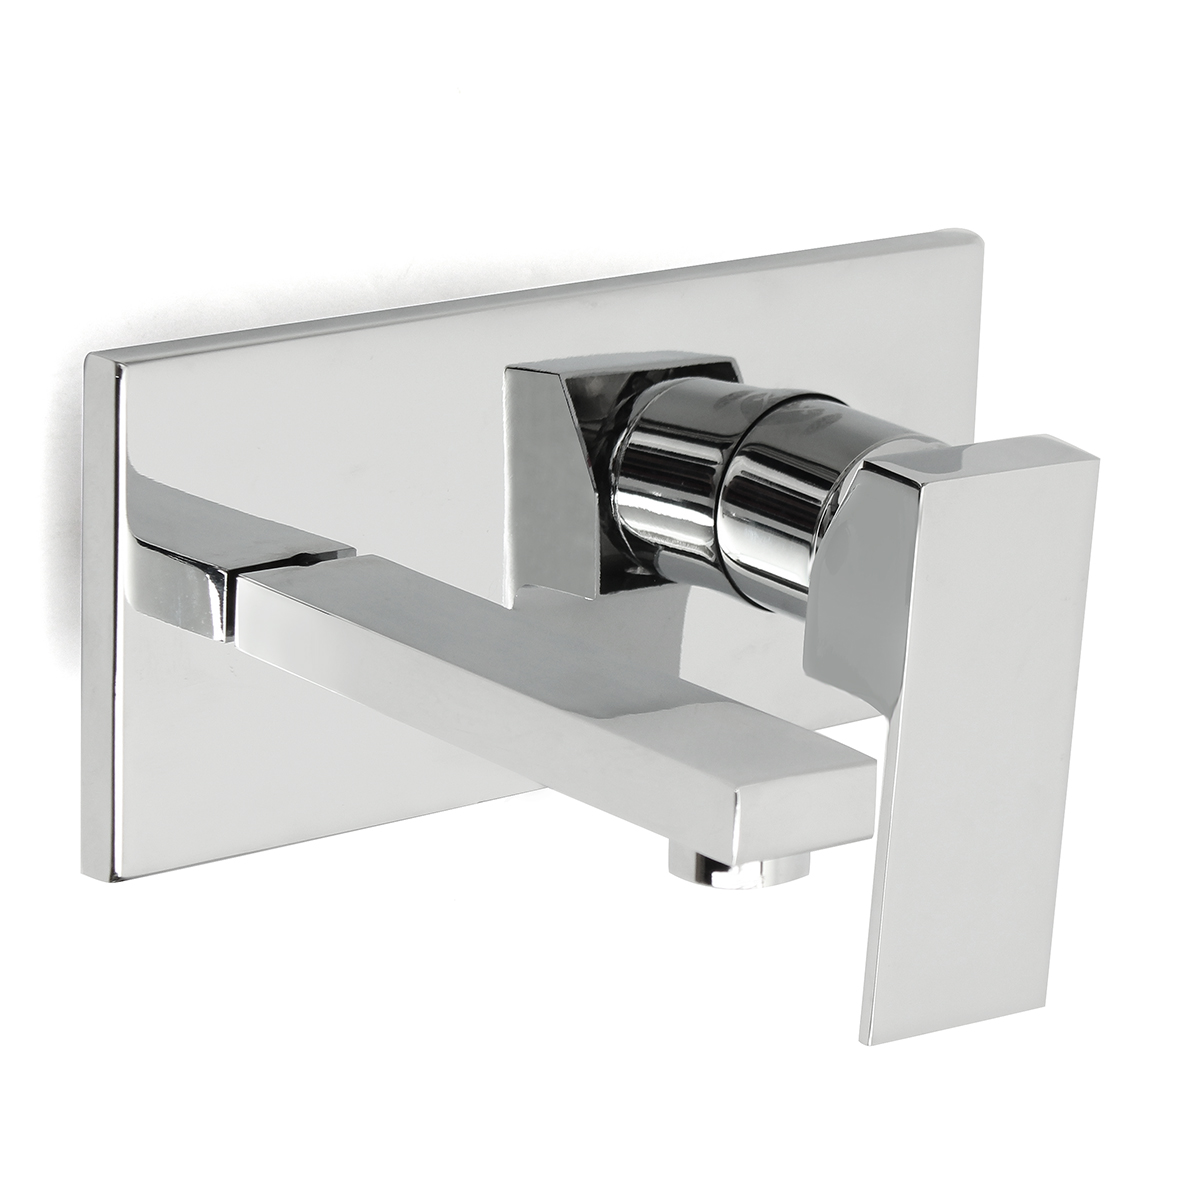 Bathroom-Bath-Tub-Modern-Chrome-Brass-Wall-Mounted-Mixer-Faucet-Tap-1330955